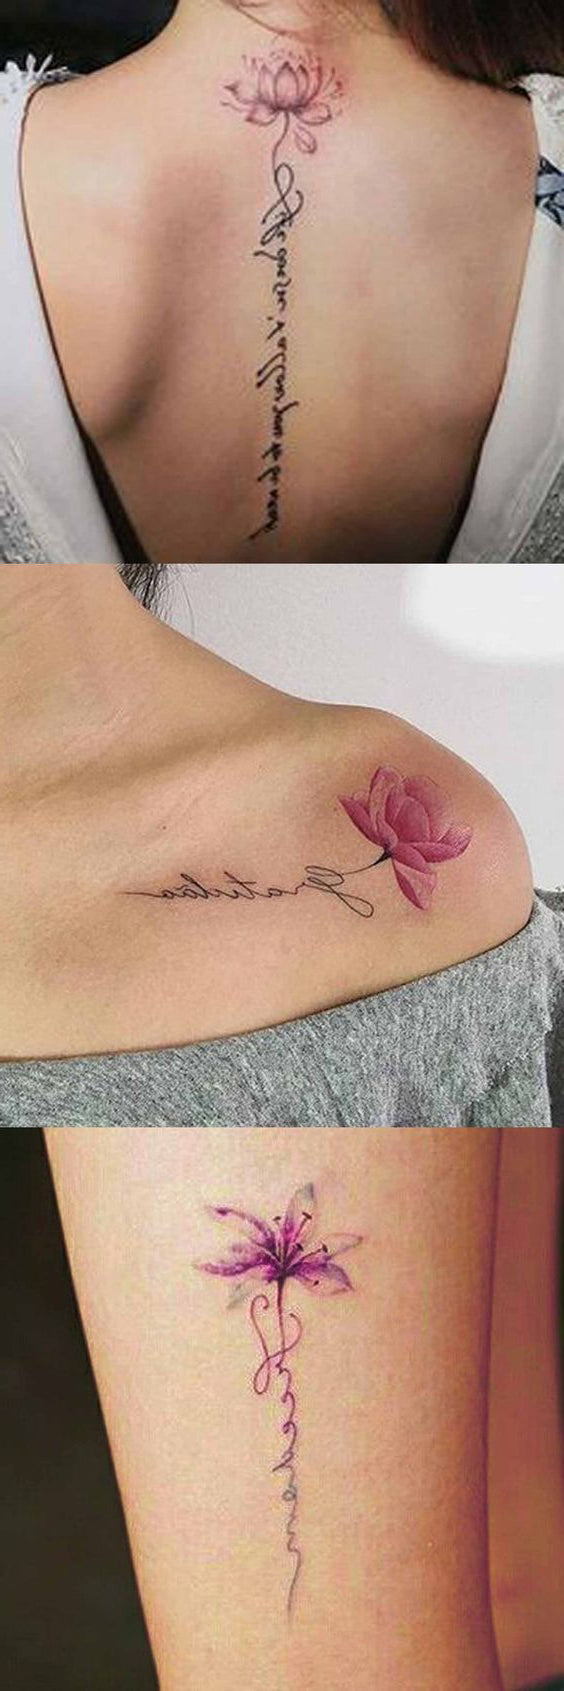 spine tattoo words